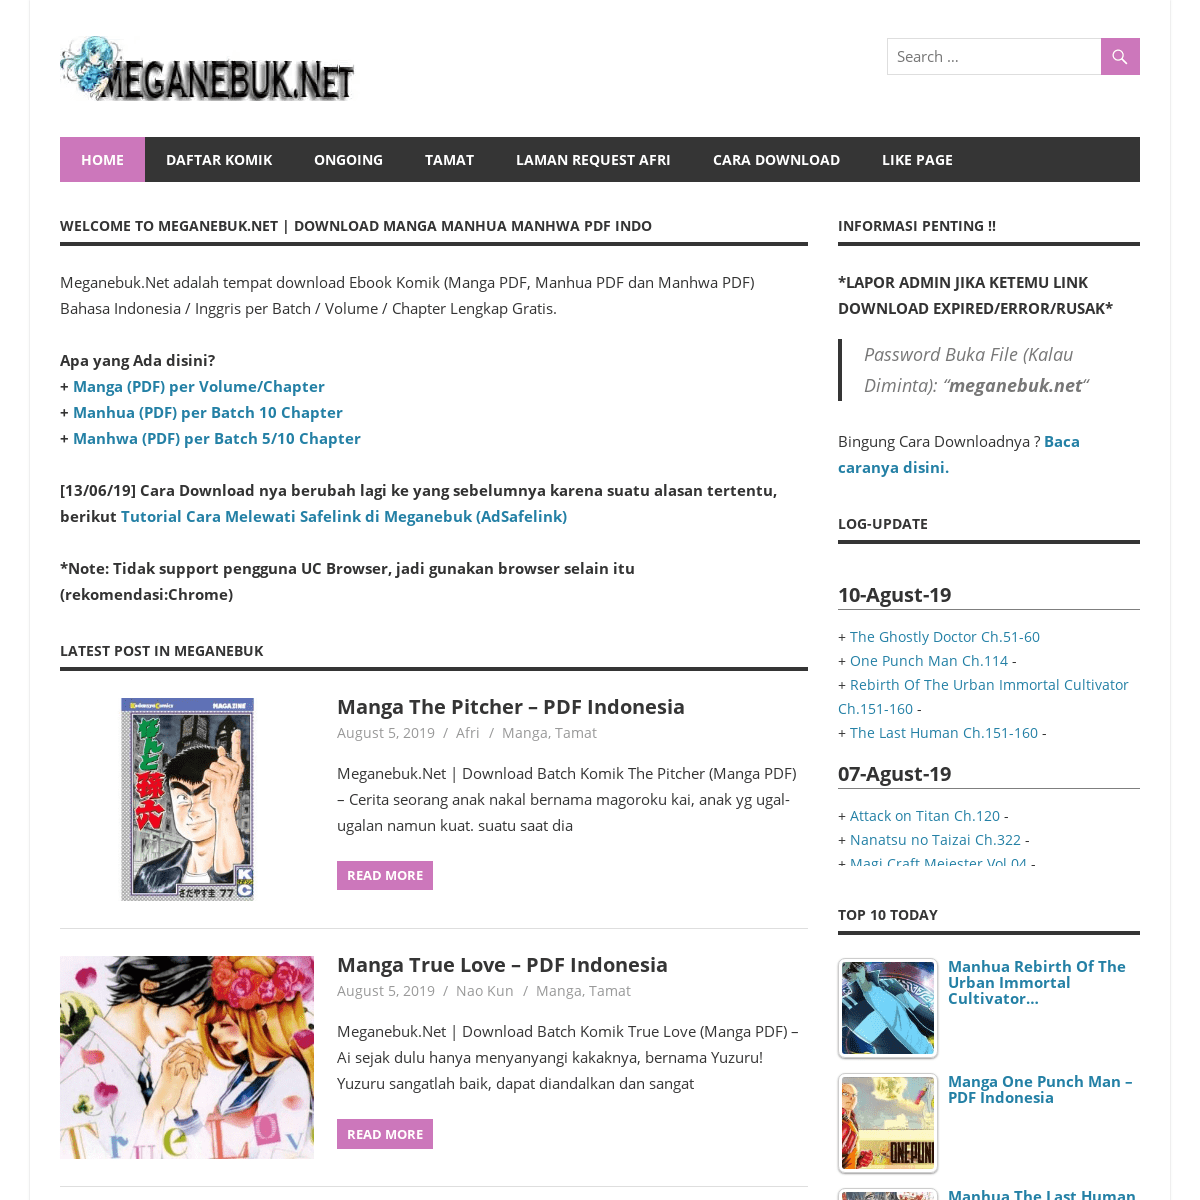 Meganebuk.Net | Download Manga Manhua Manhwa PDF Indo